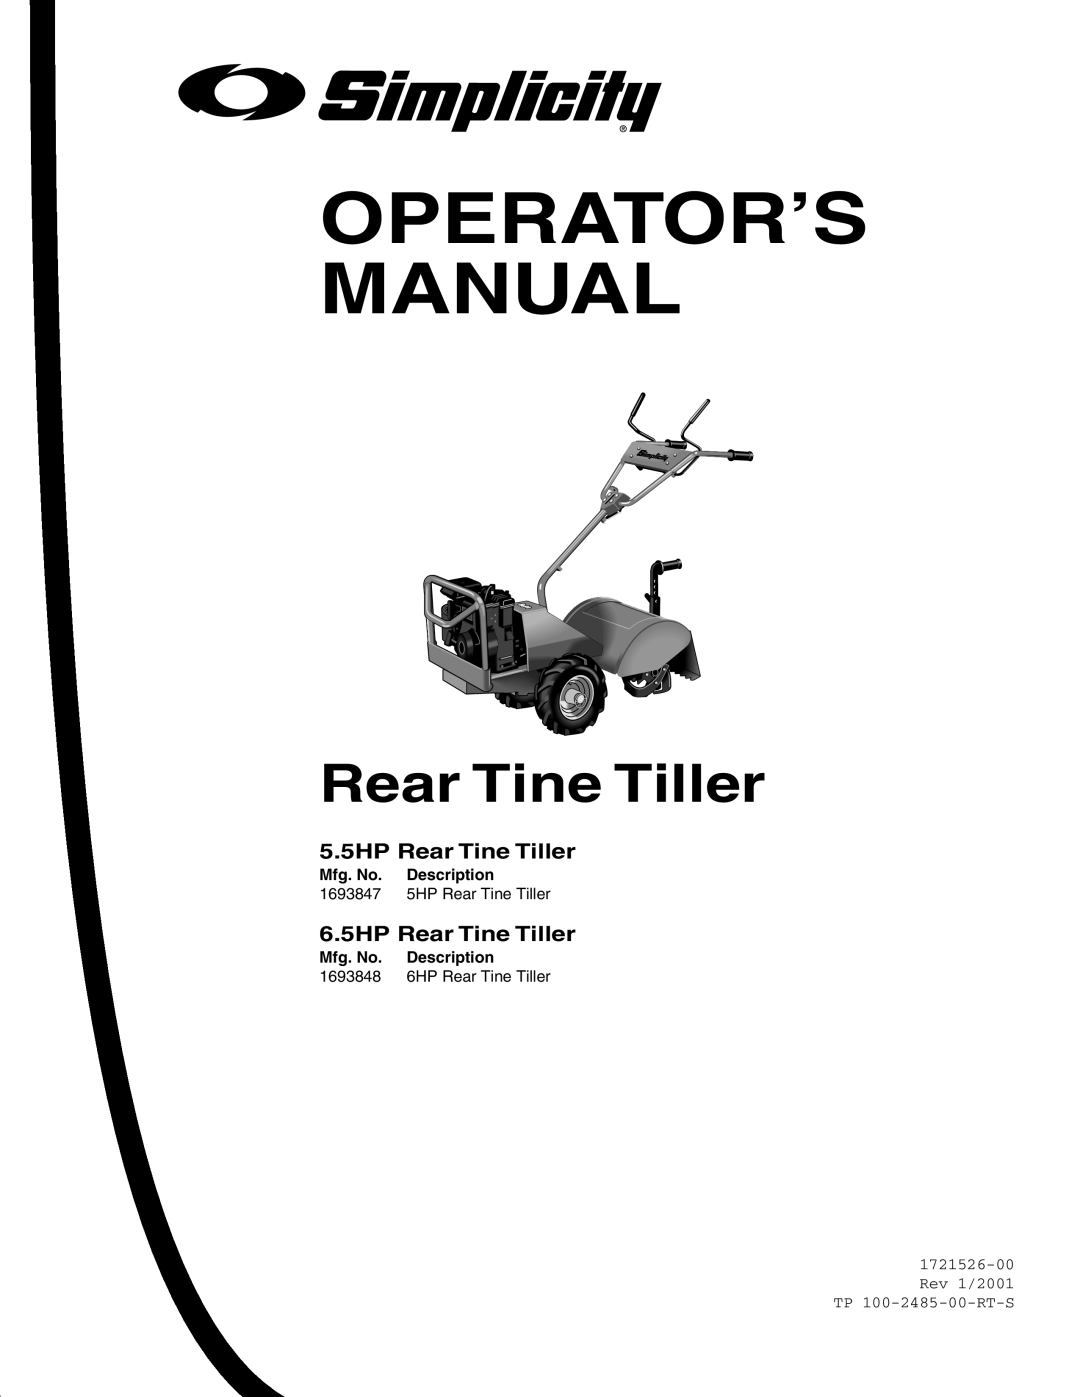 Simplicity 1693847 manual Operator’S Manual, 5.5HP Rear Tine Tiller, 6.5HP Rear Tine Tiller, Mfg. No. Description 